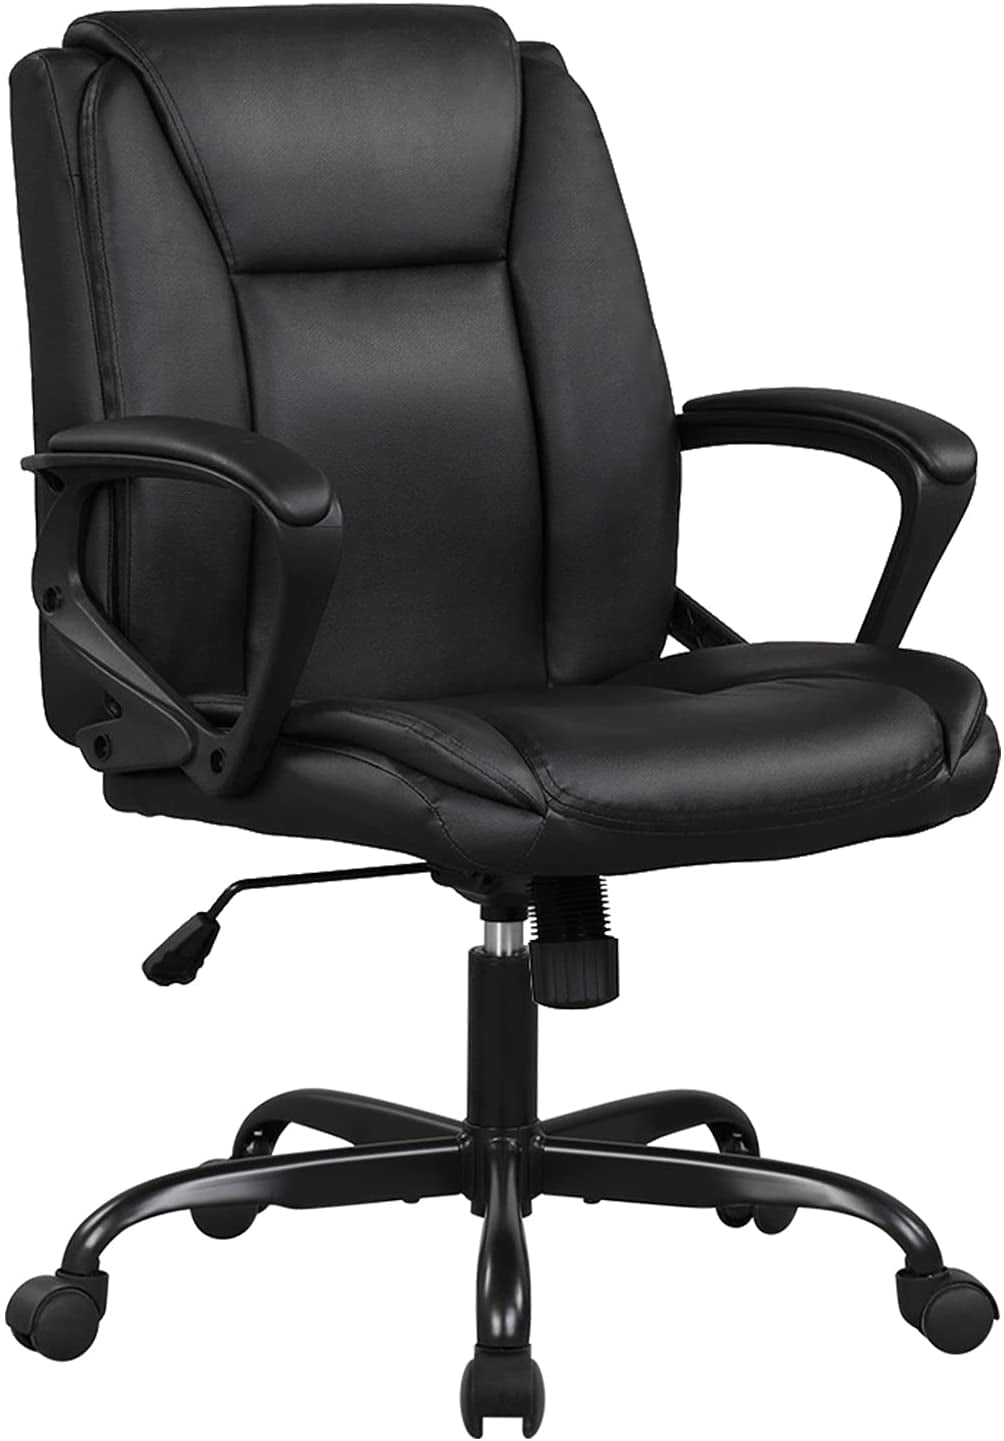 Executive Chair Ergonomic High Back Office Swivel Computer Desk PU Leather Black 